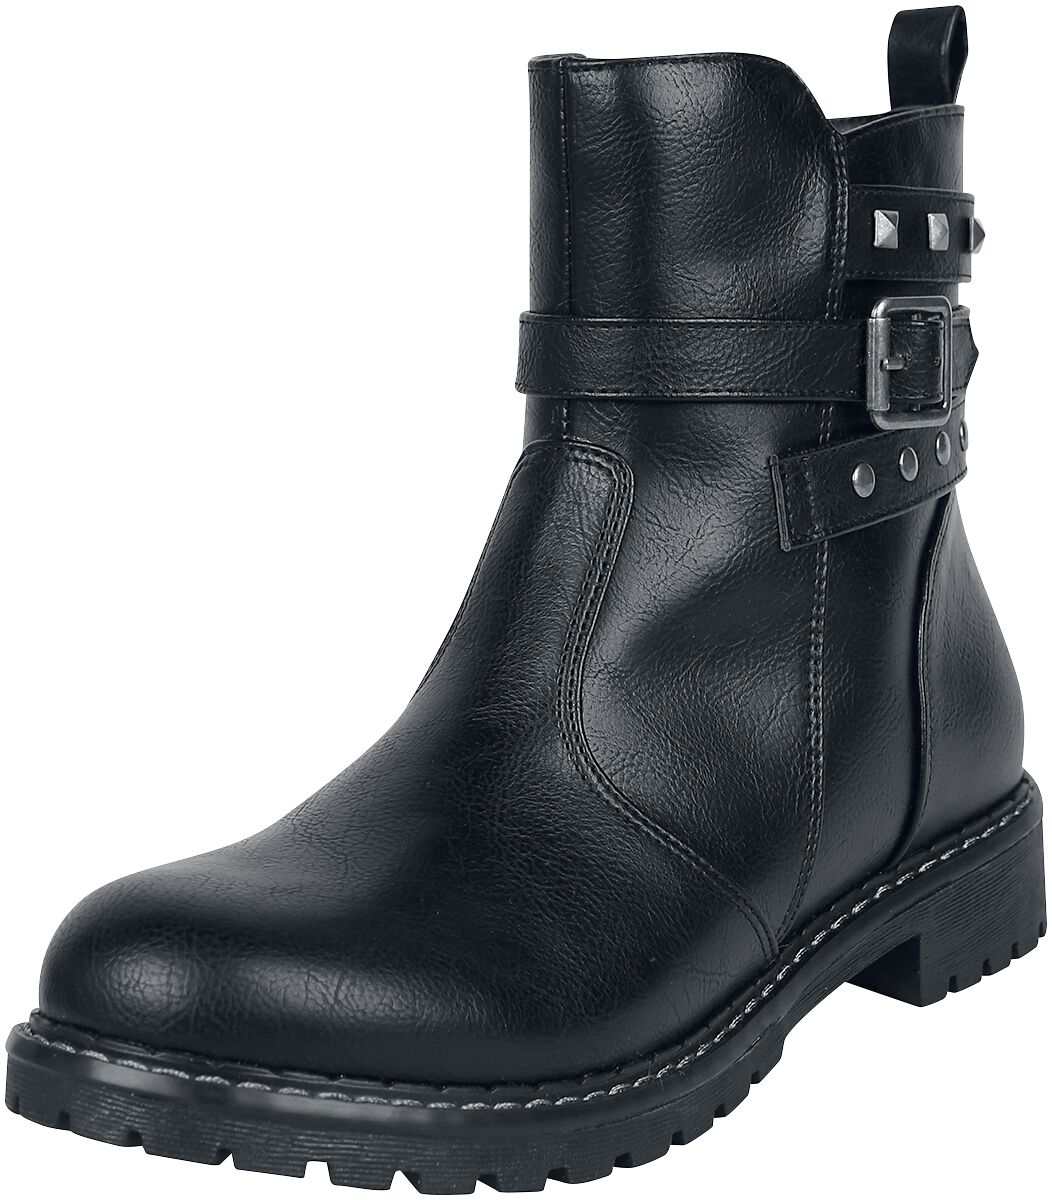 Black Premium by EMP Boots with Studs and Buckles Bikerboot schwarz in EU37